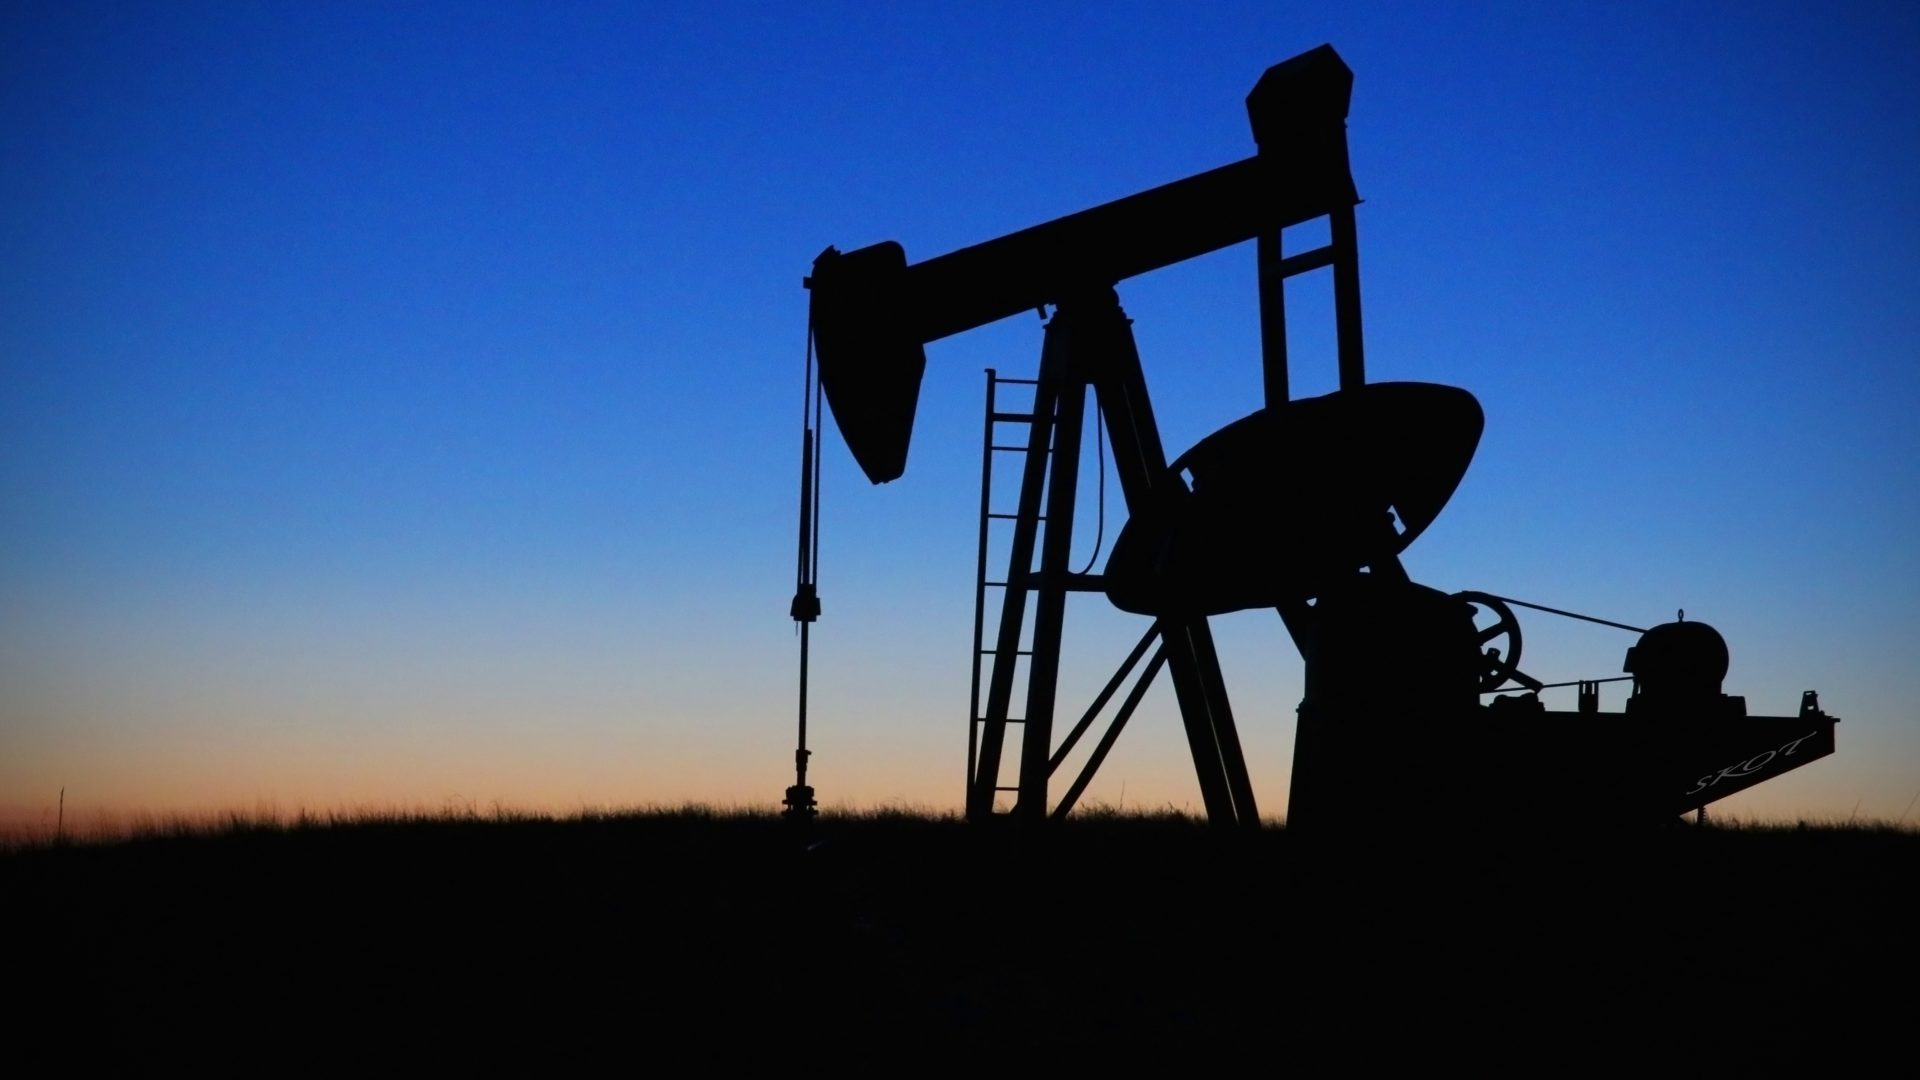 embargo europeen russie devra reduire production petrole saturer stockage - Le Monde de l'Energie